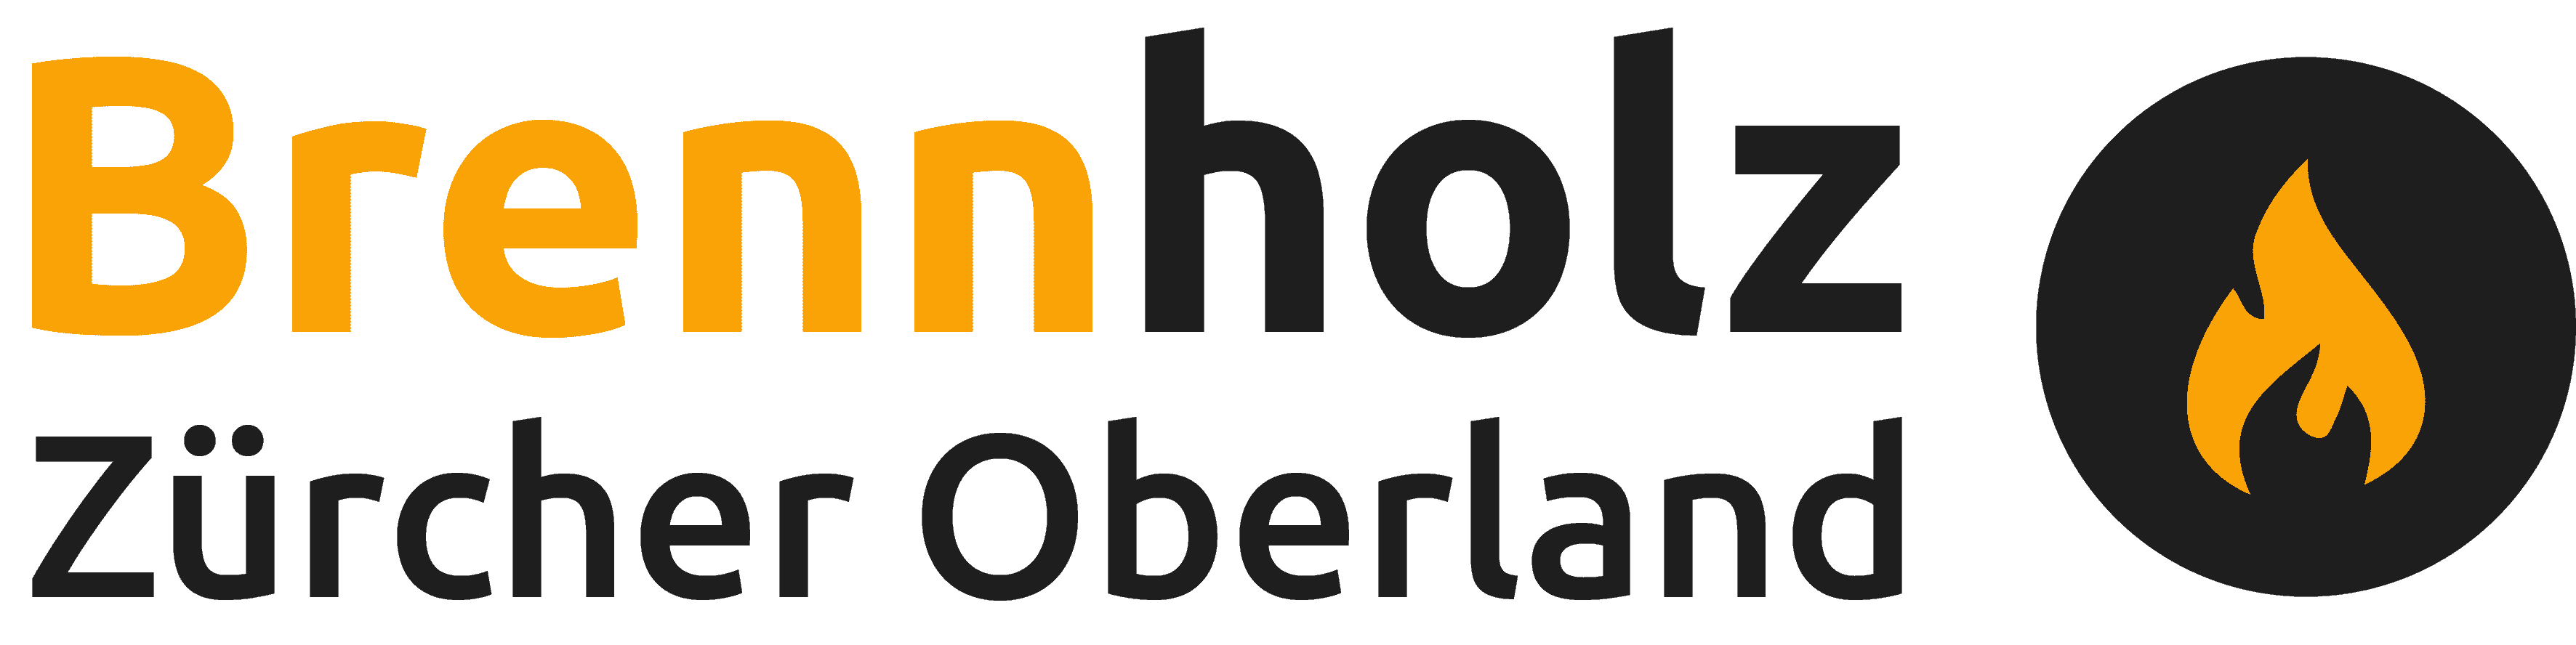 Brennholz Zürcher Oberland Logo dunkel